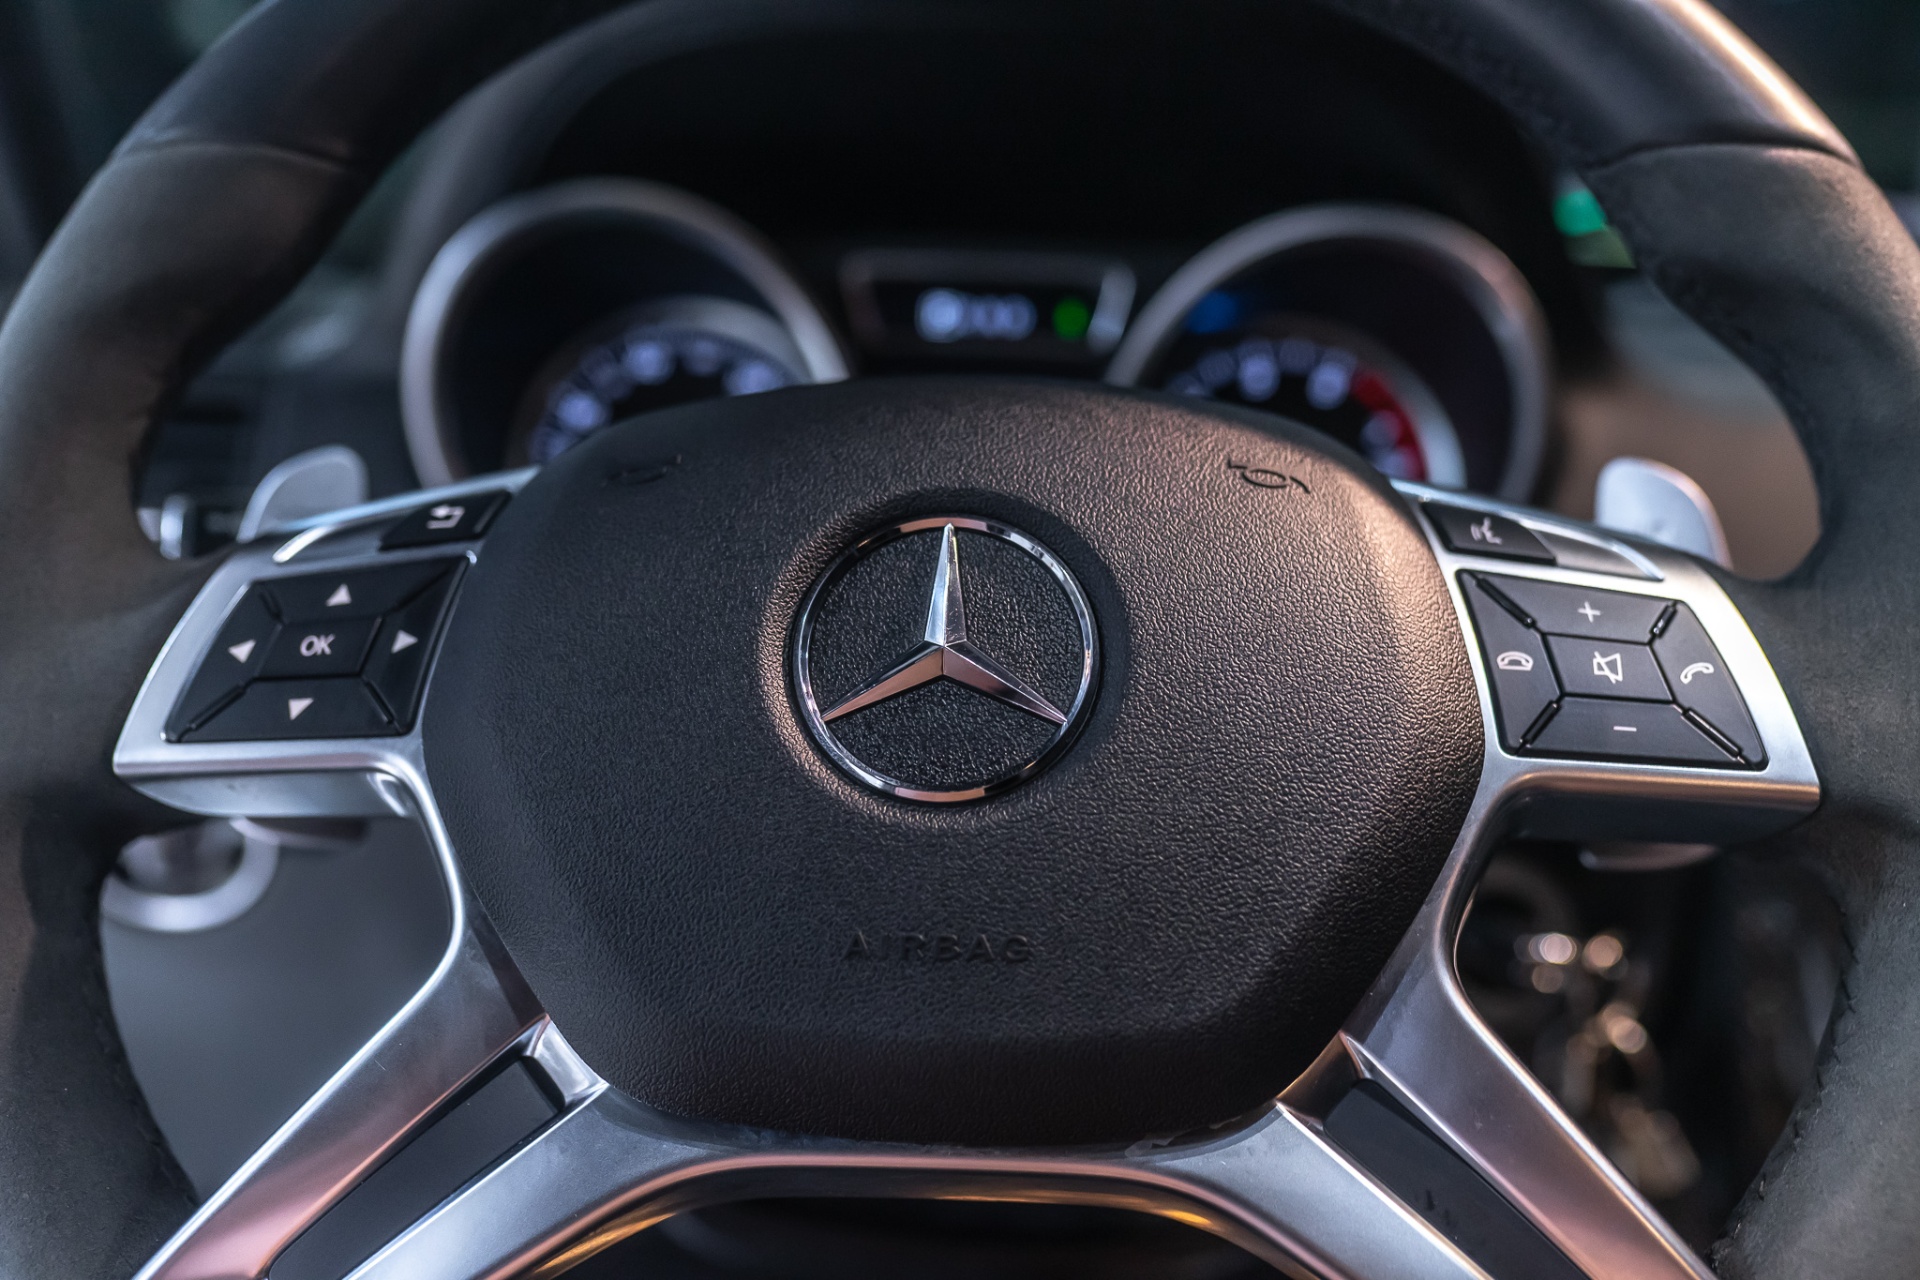 Used-2017-Mercedes-Benz-G550-4x4-Squared-SUV-Super-LOW-Miles-Diamond-Stitching-RARE